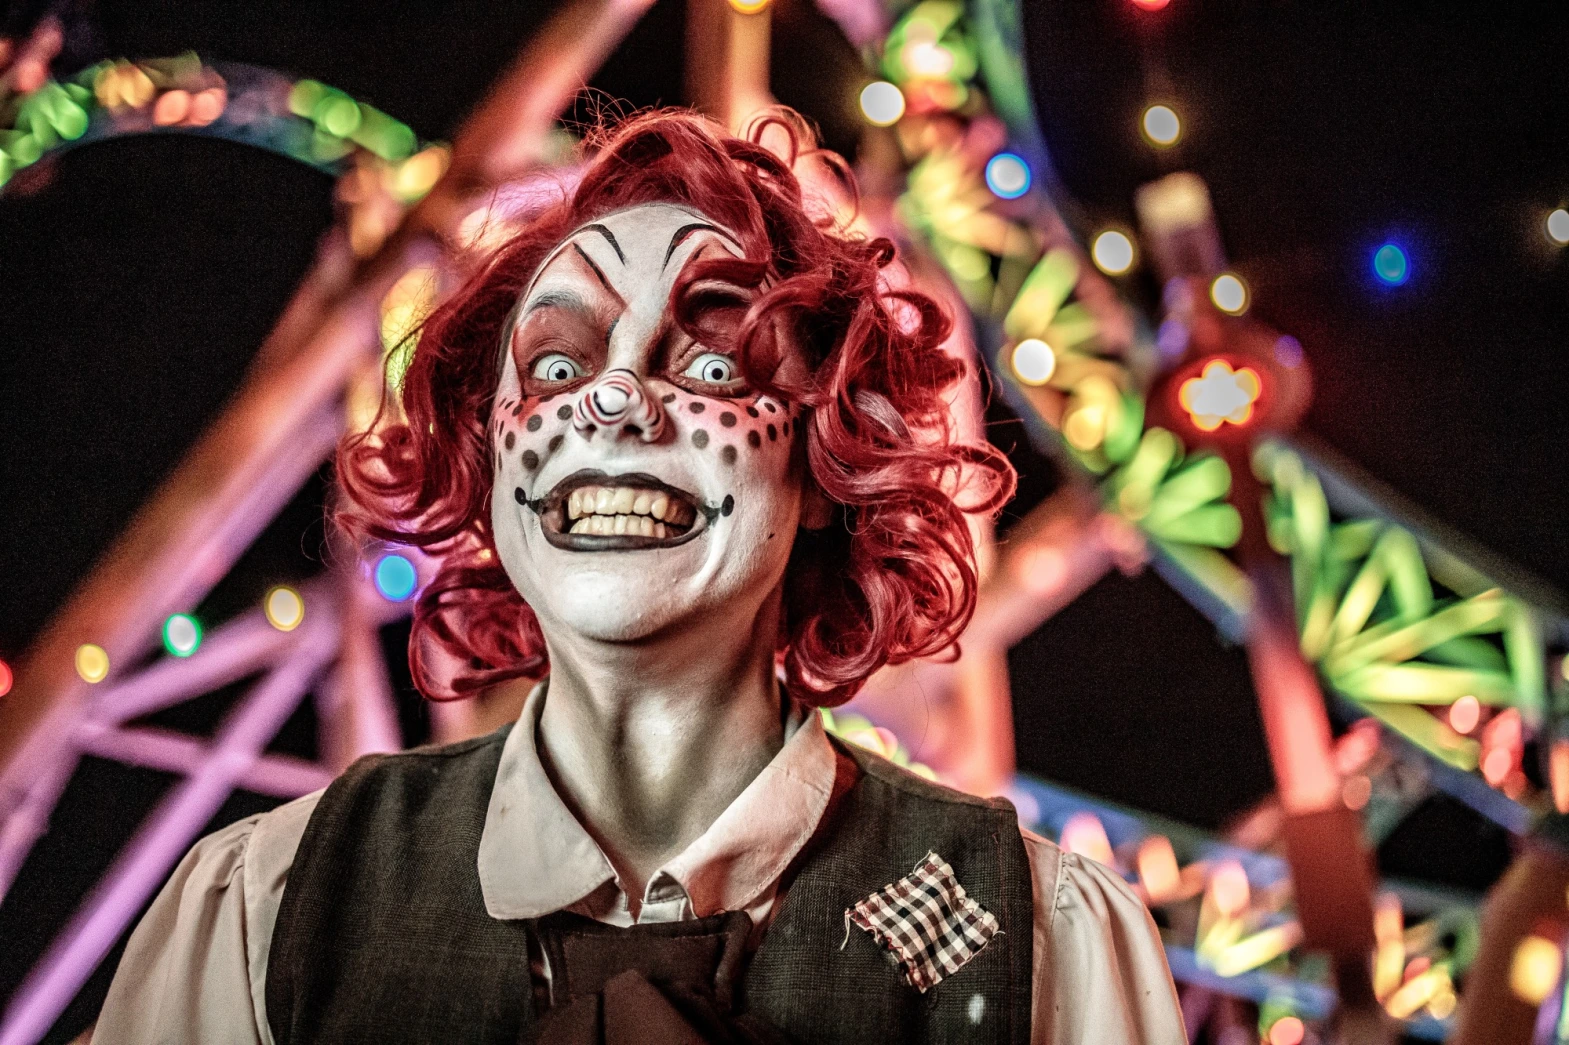 A deviant clown haunts the CarnEvil scare zone at Knott’s Scary Farm. (Courtesy of Knott’s)